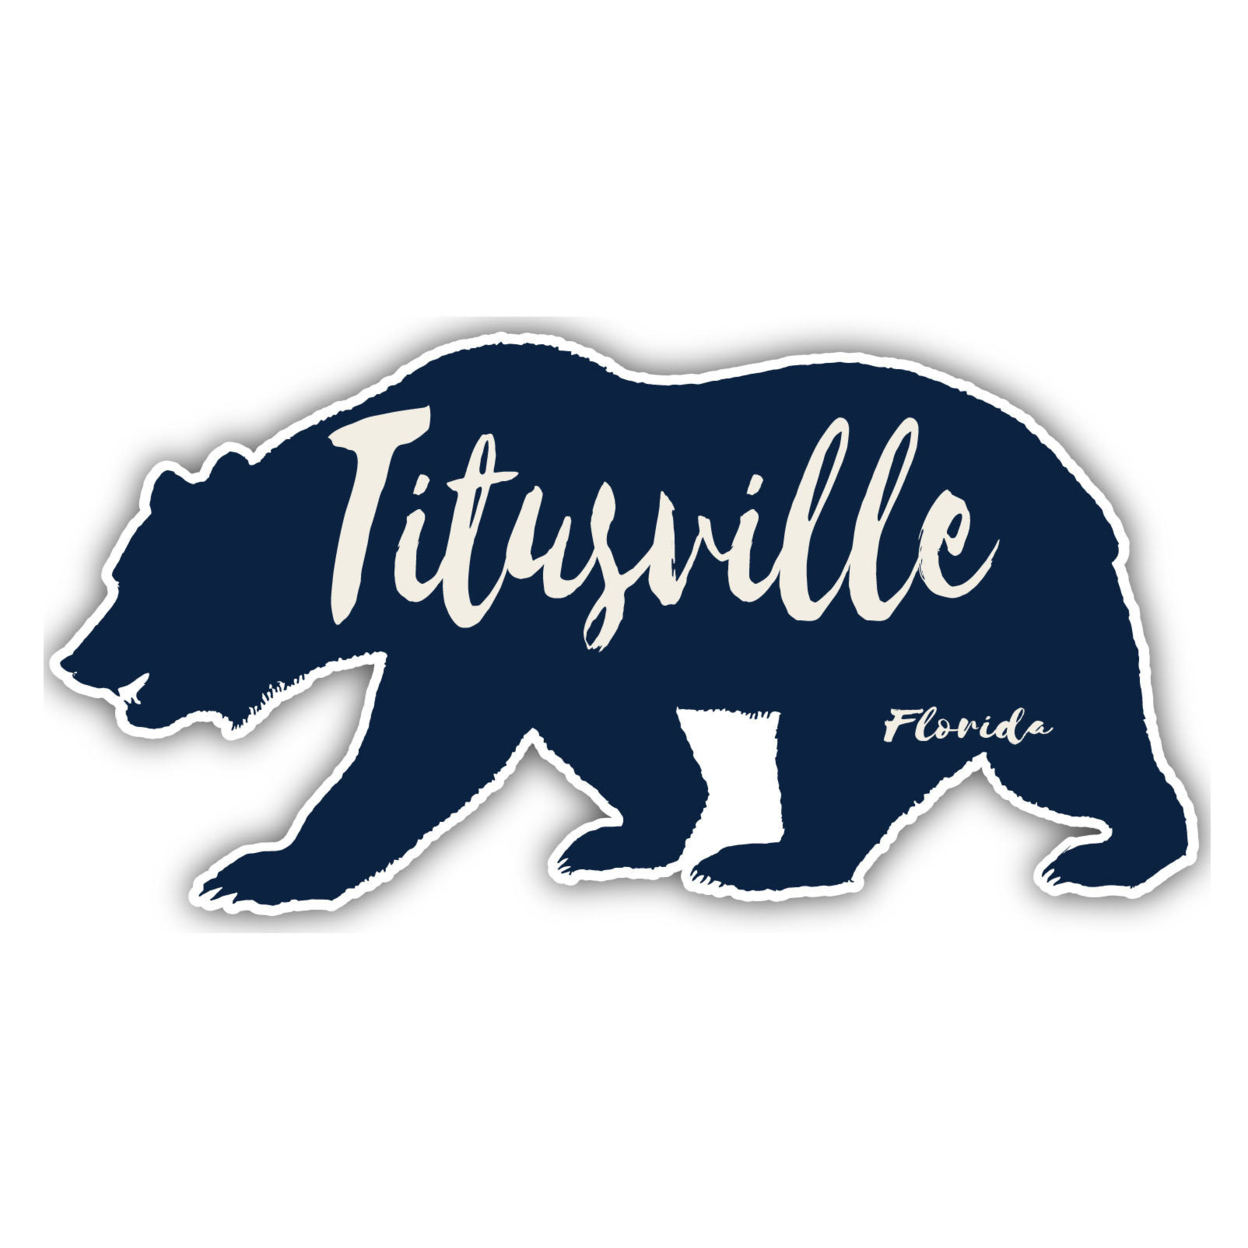 Titusville Florida Souvenir Decorative Stickers (Choose Theme And Size) - Single Unit, 2-Inch, Camp Life